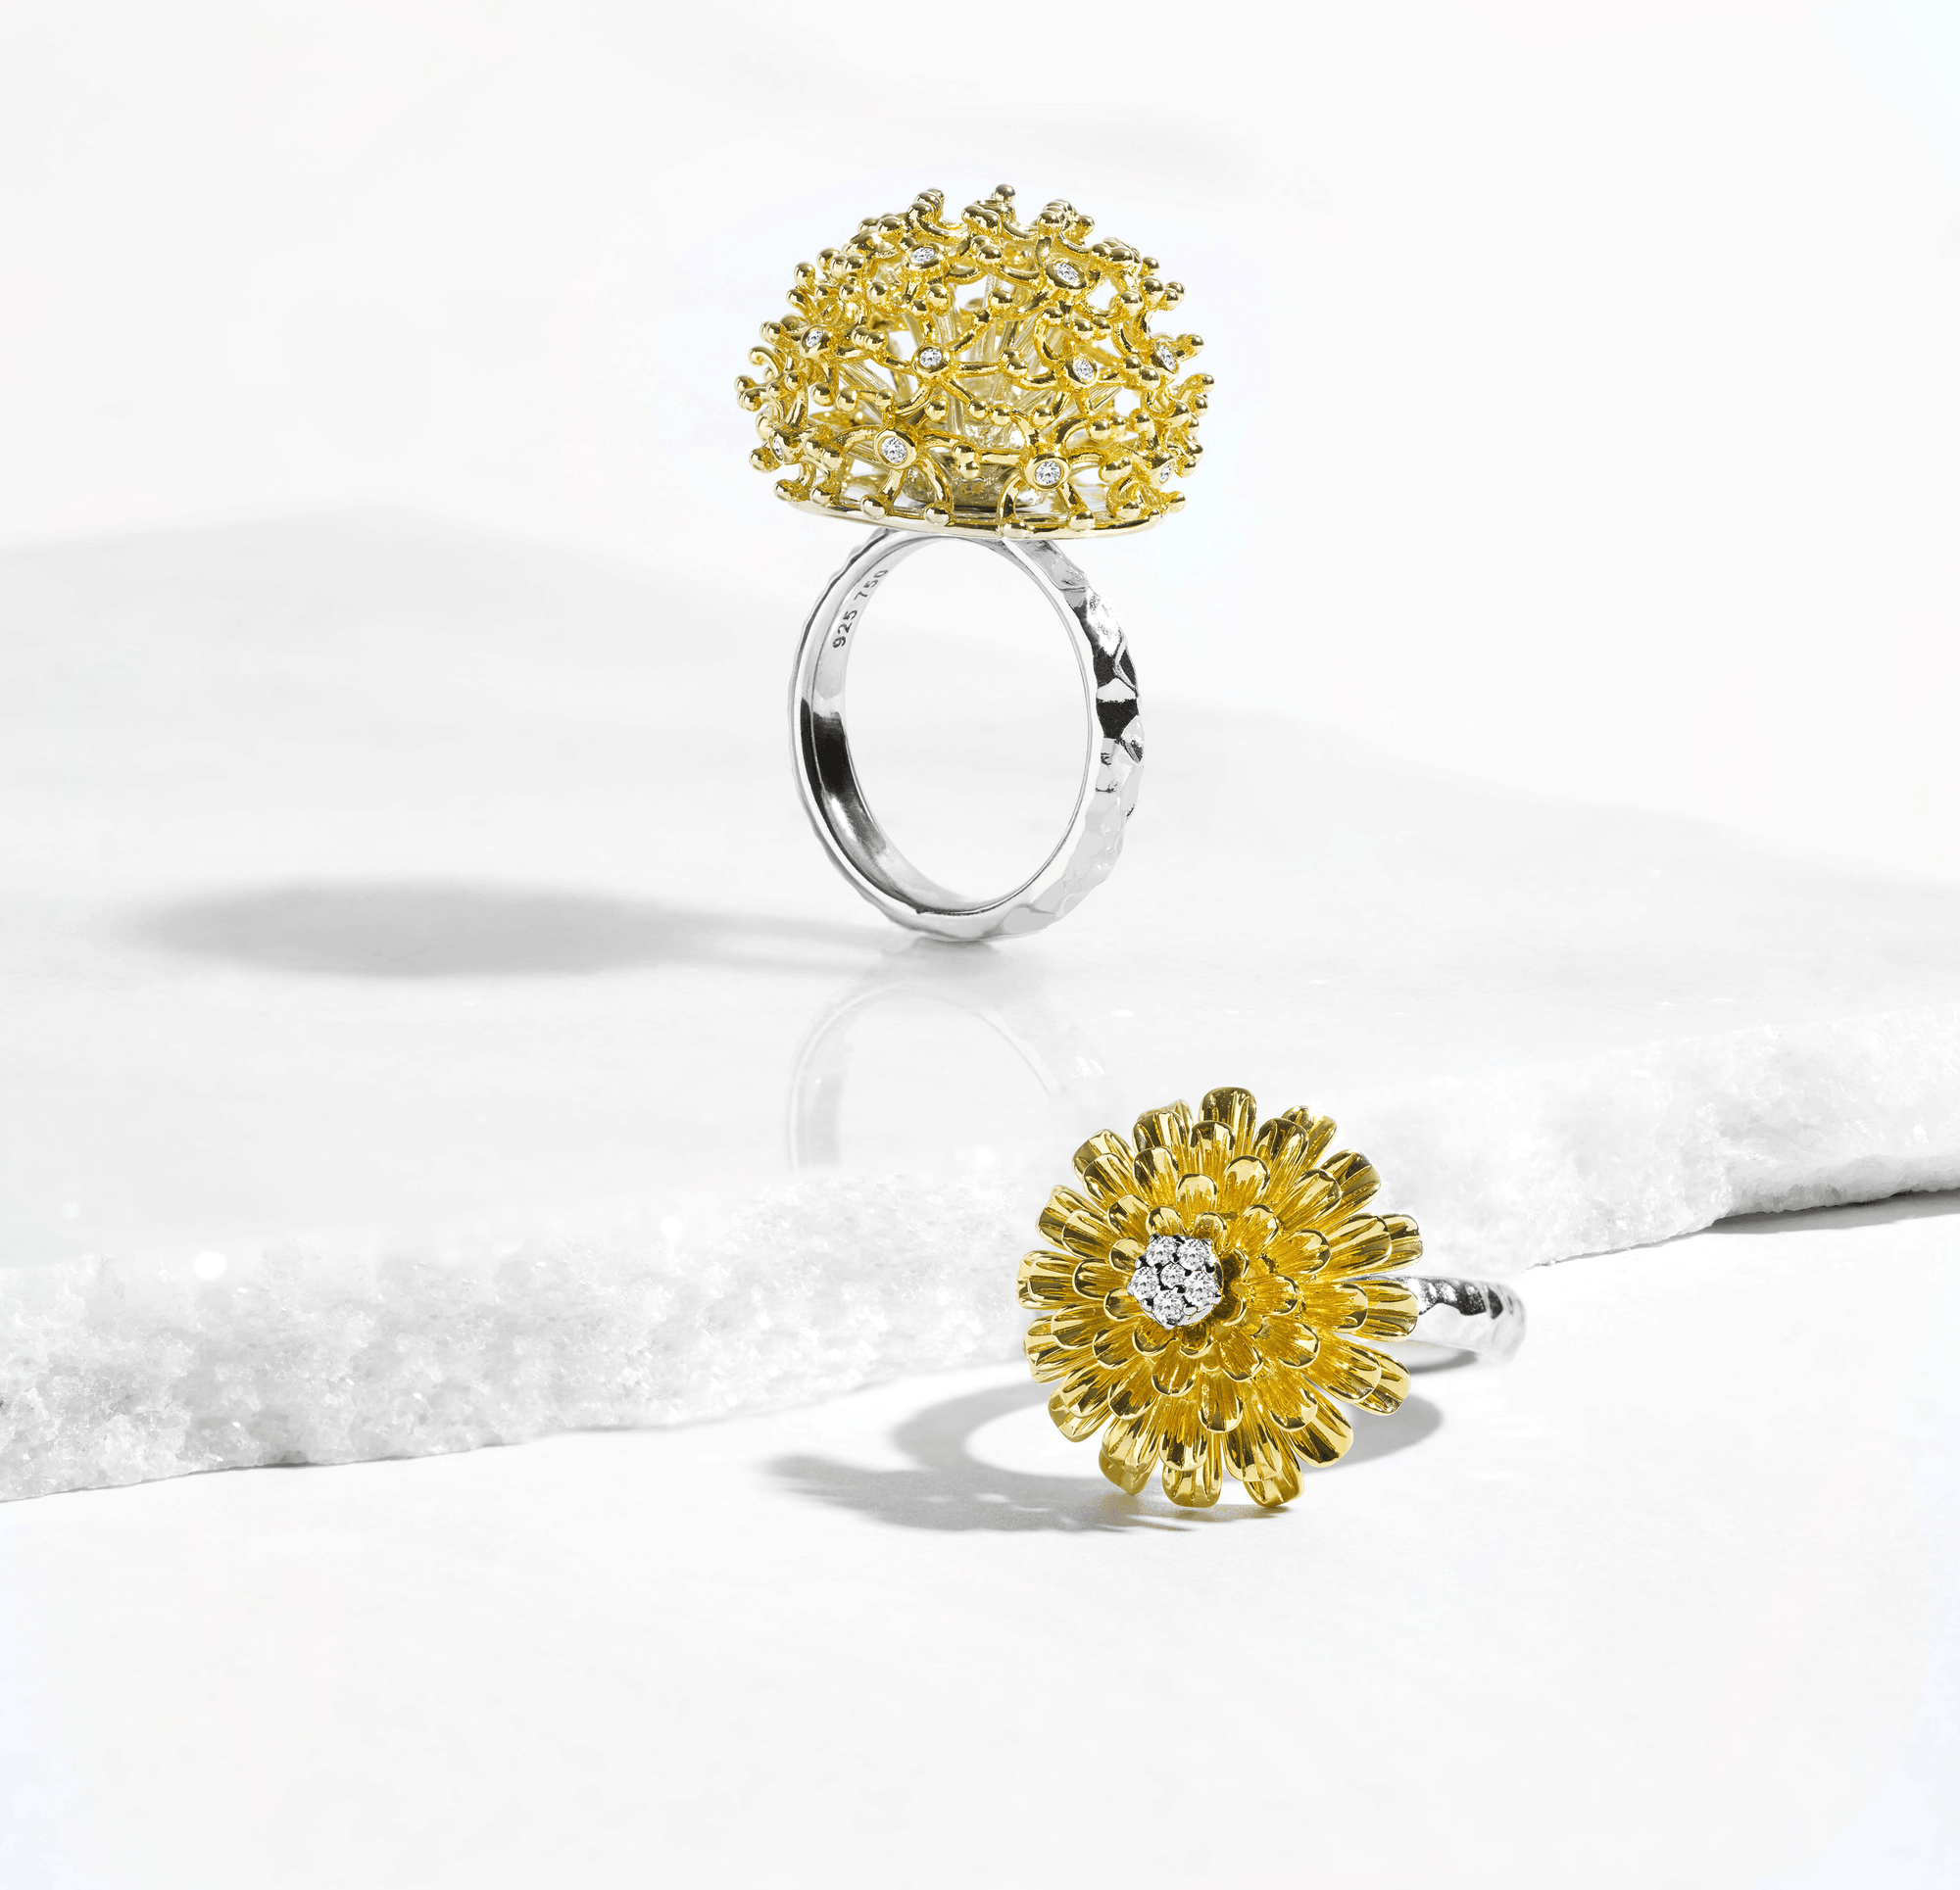 Michael Aram Dandelion Flower Ring with Diamonds